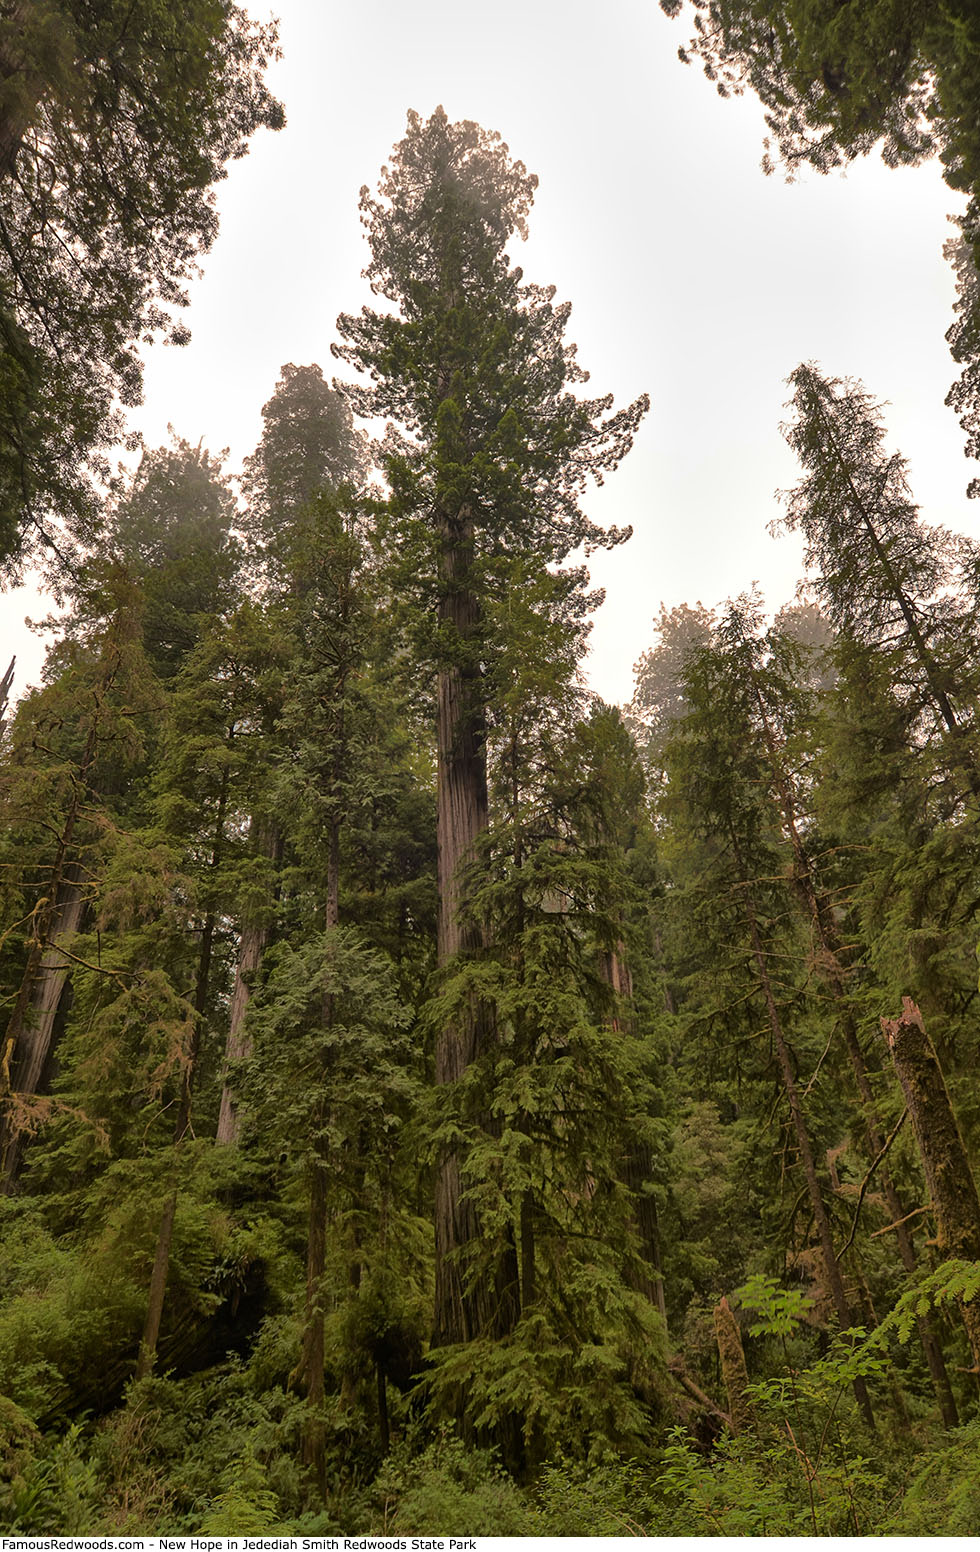 Jedediah Smith Redwoods State Park - New Hope Tree